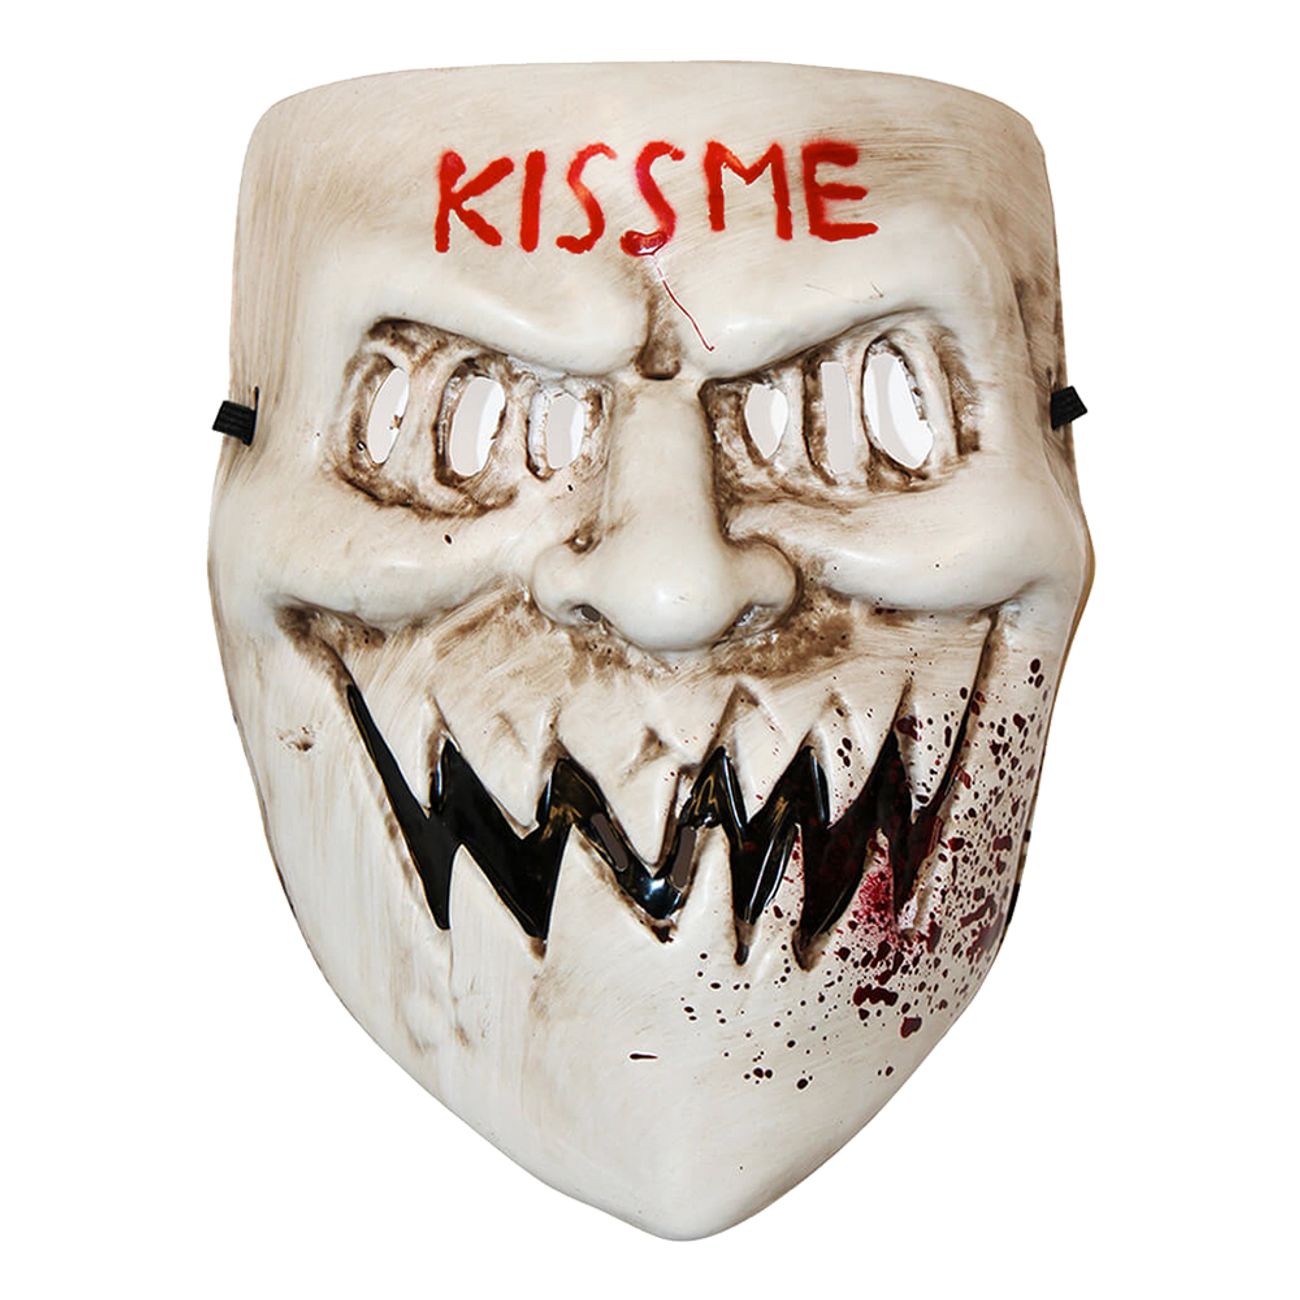 sinister-kiss-me-mask-1